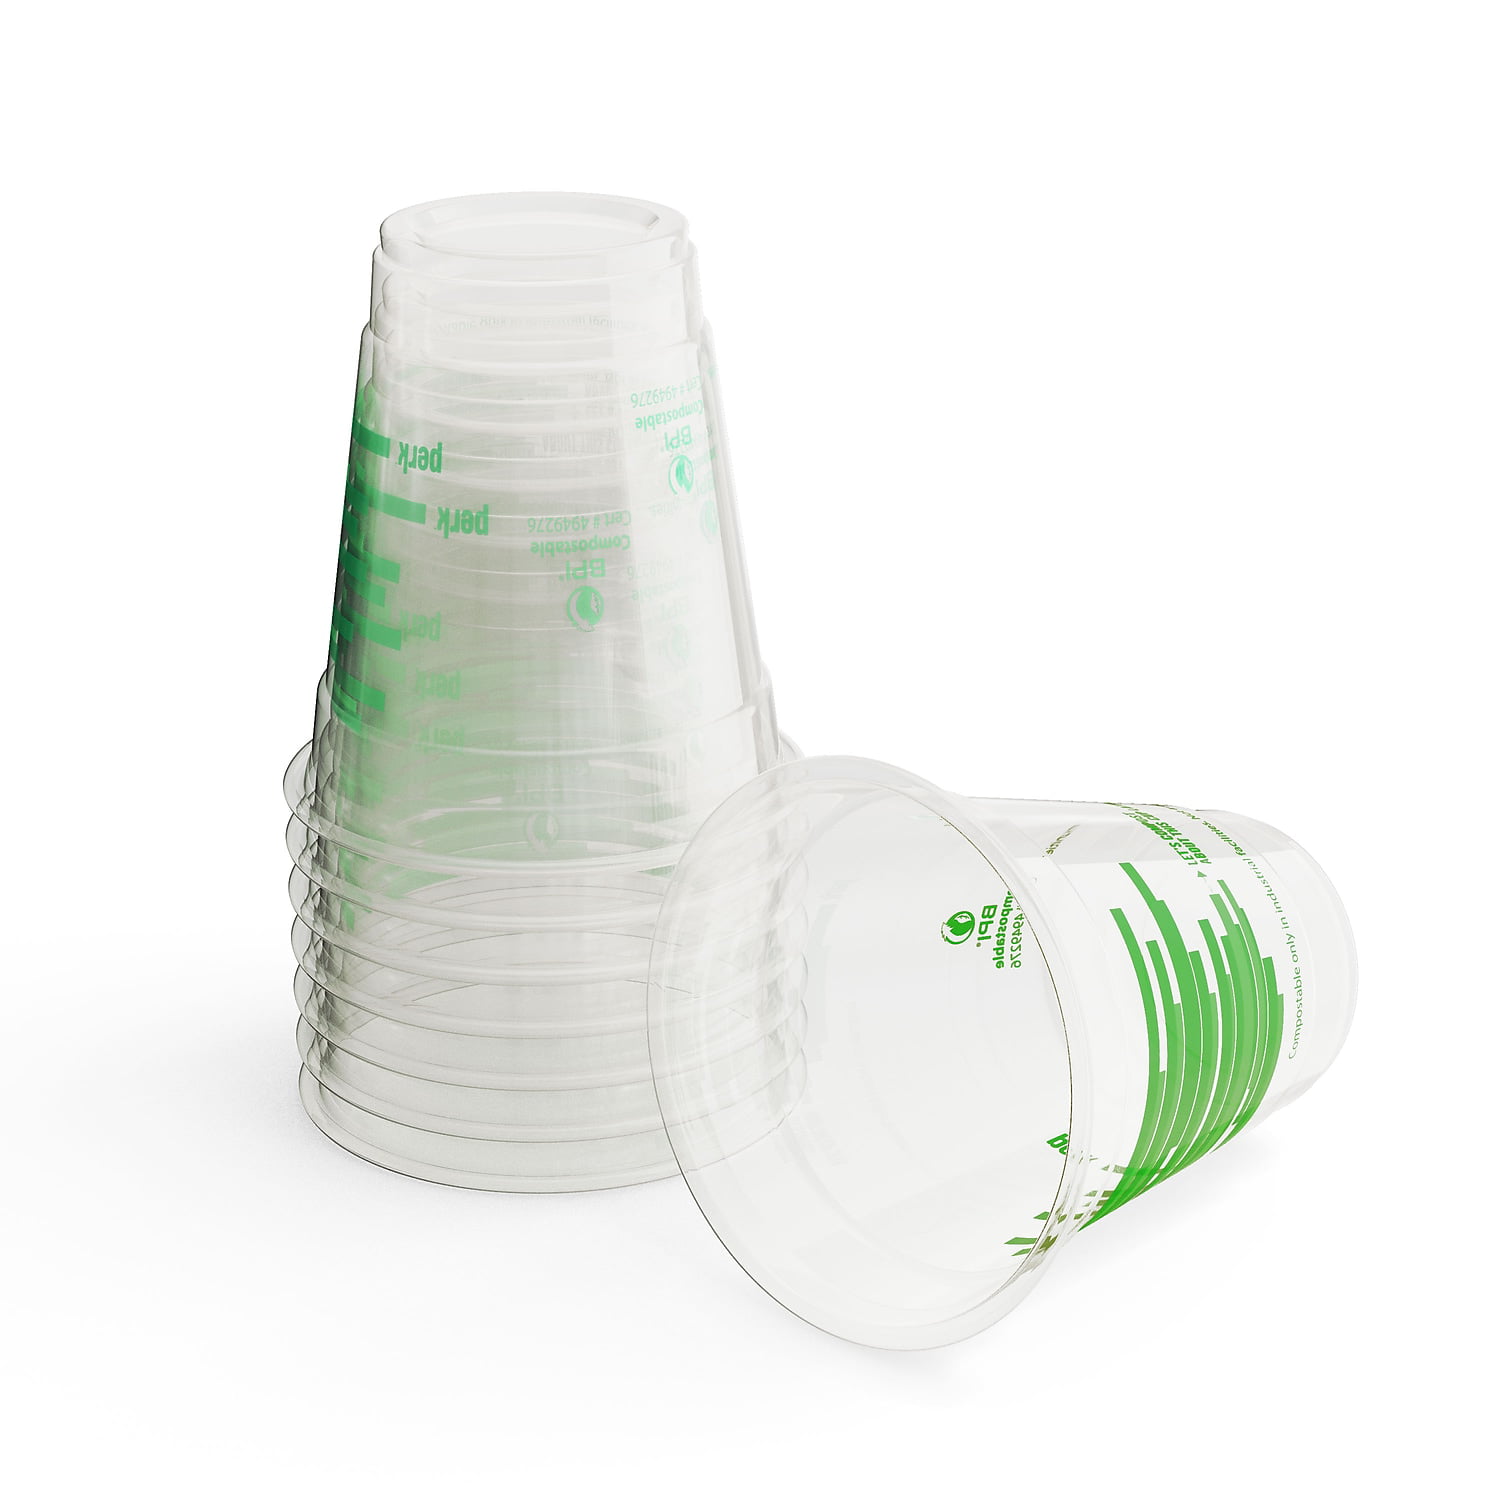 Five Best Compostable Disposable Cups - Greenprint